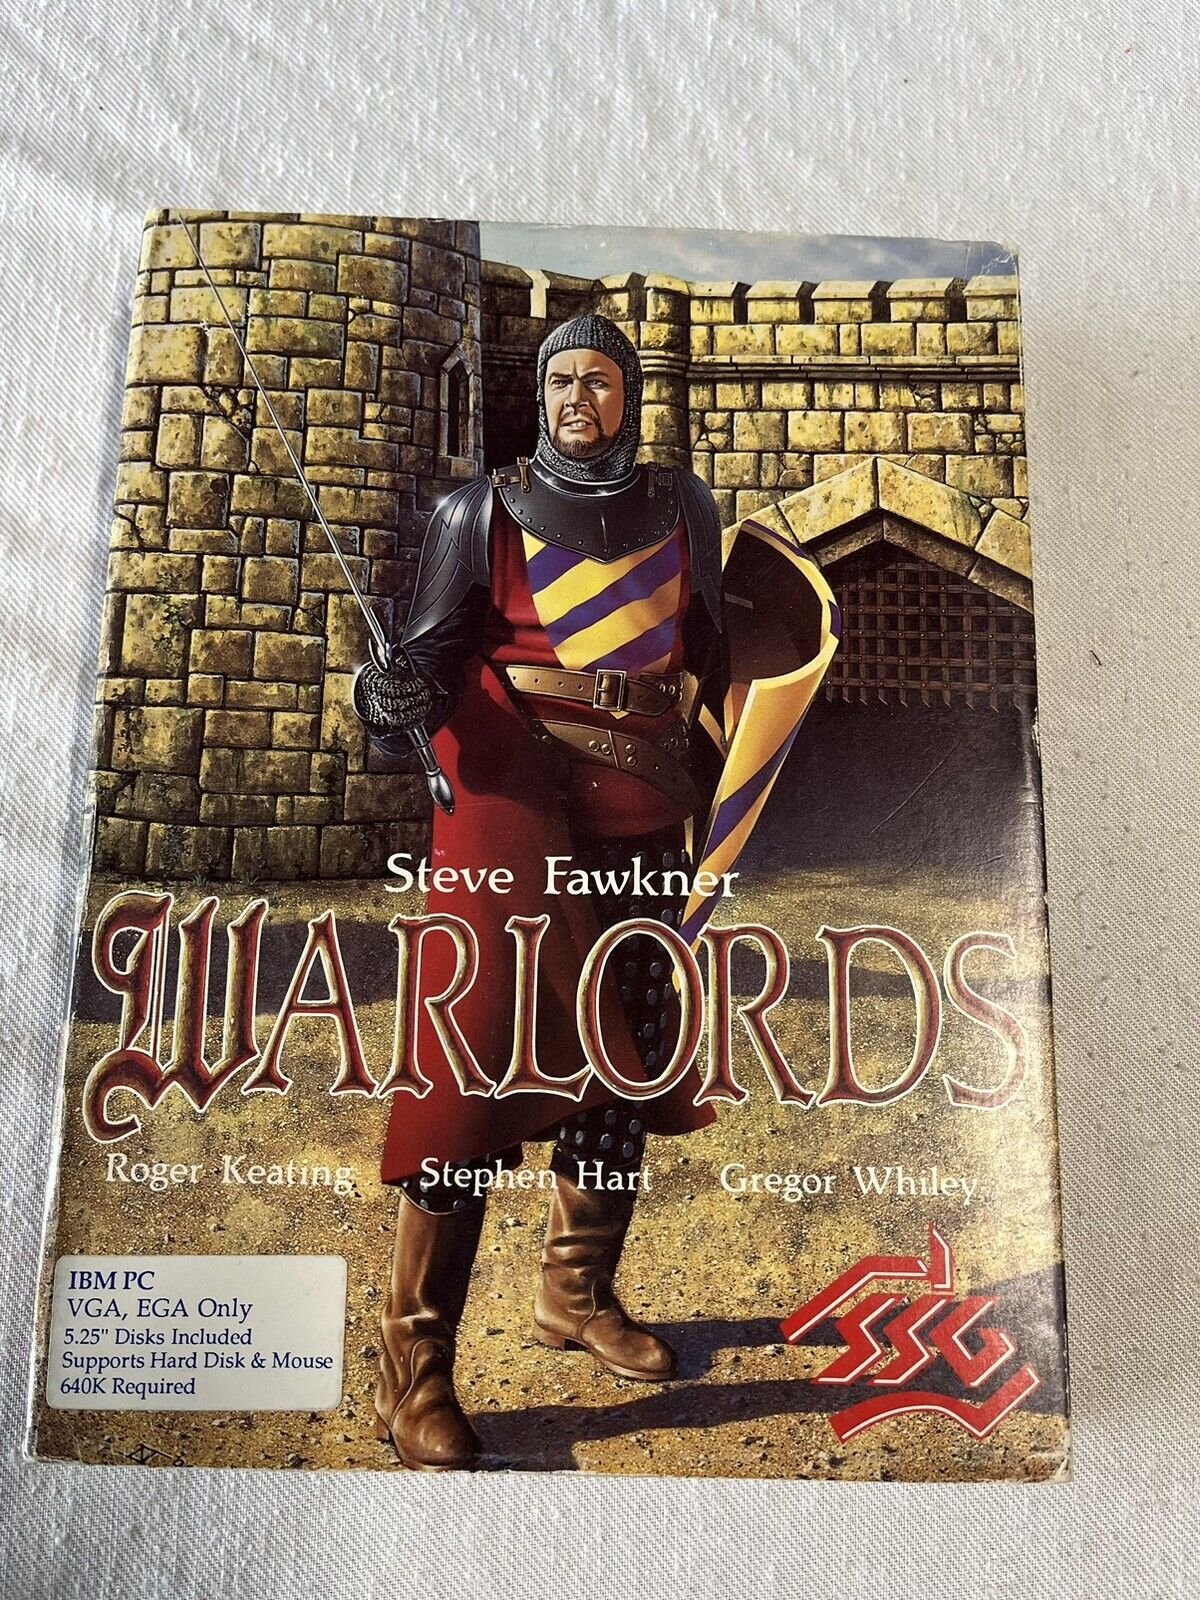 Warlords IBM Vintage Big Box Floppy Disk PC Game, Complete